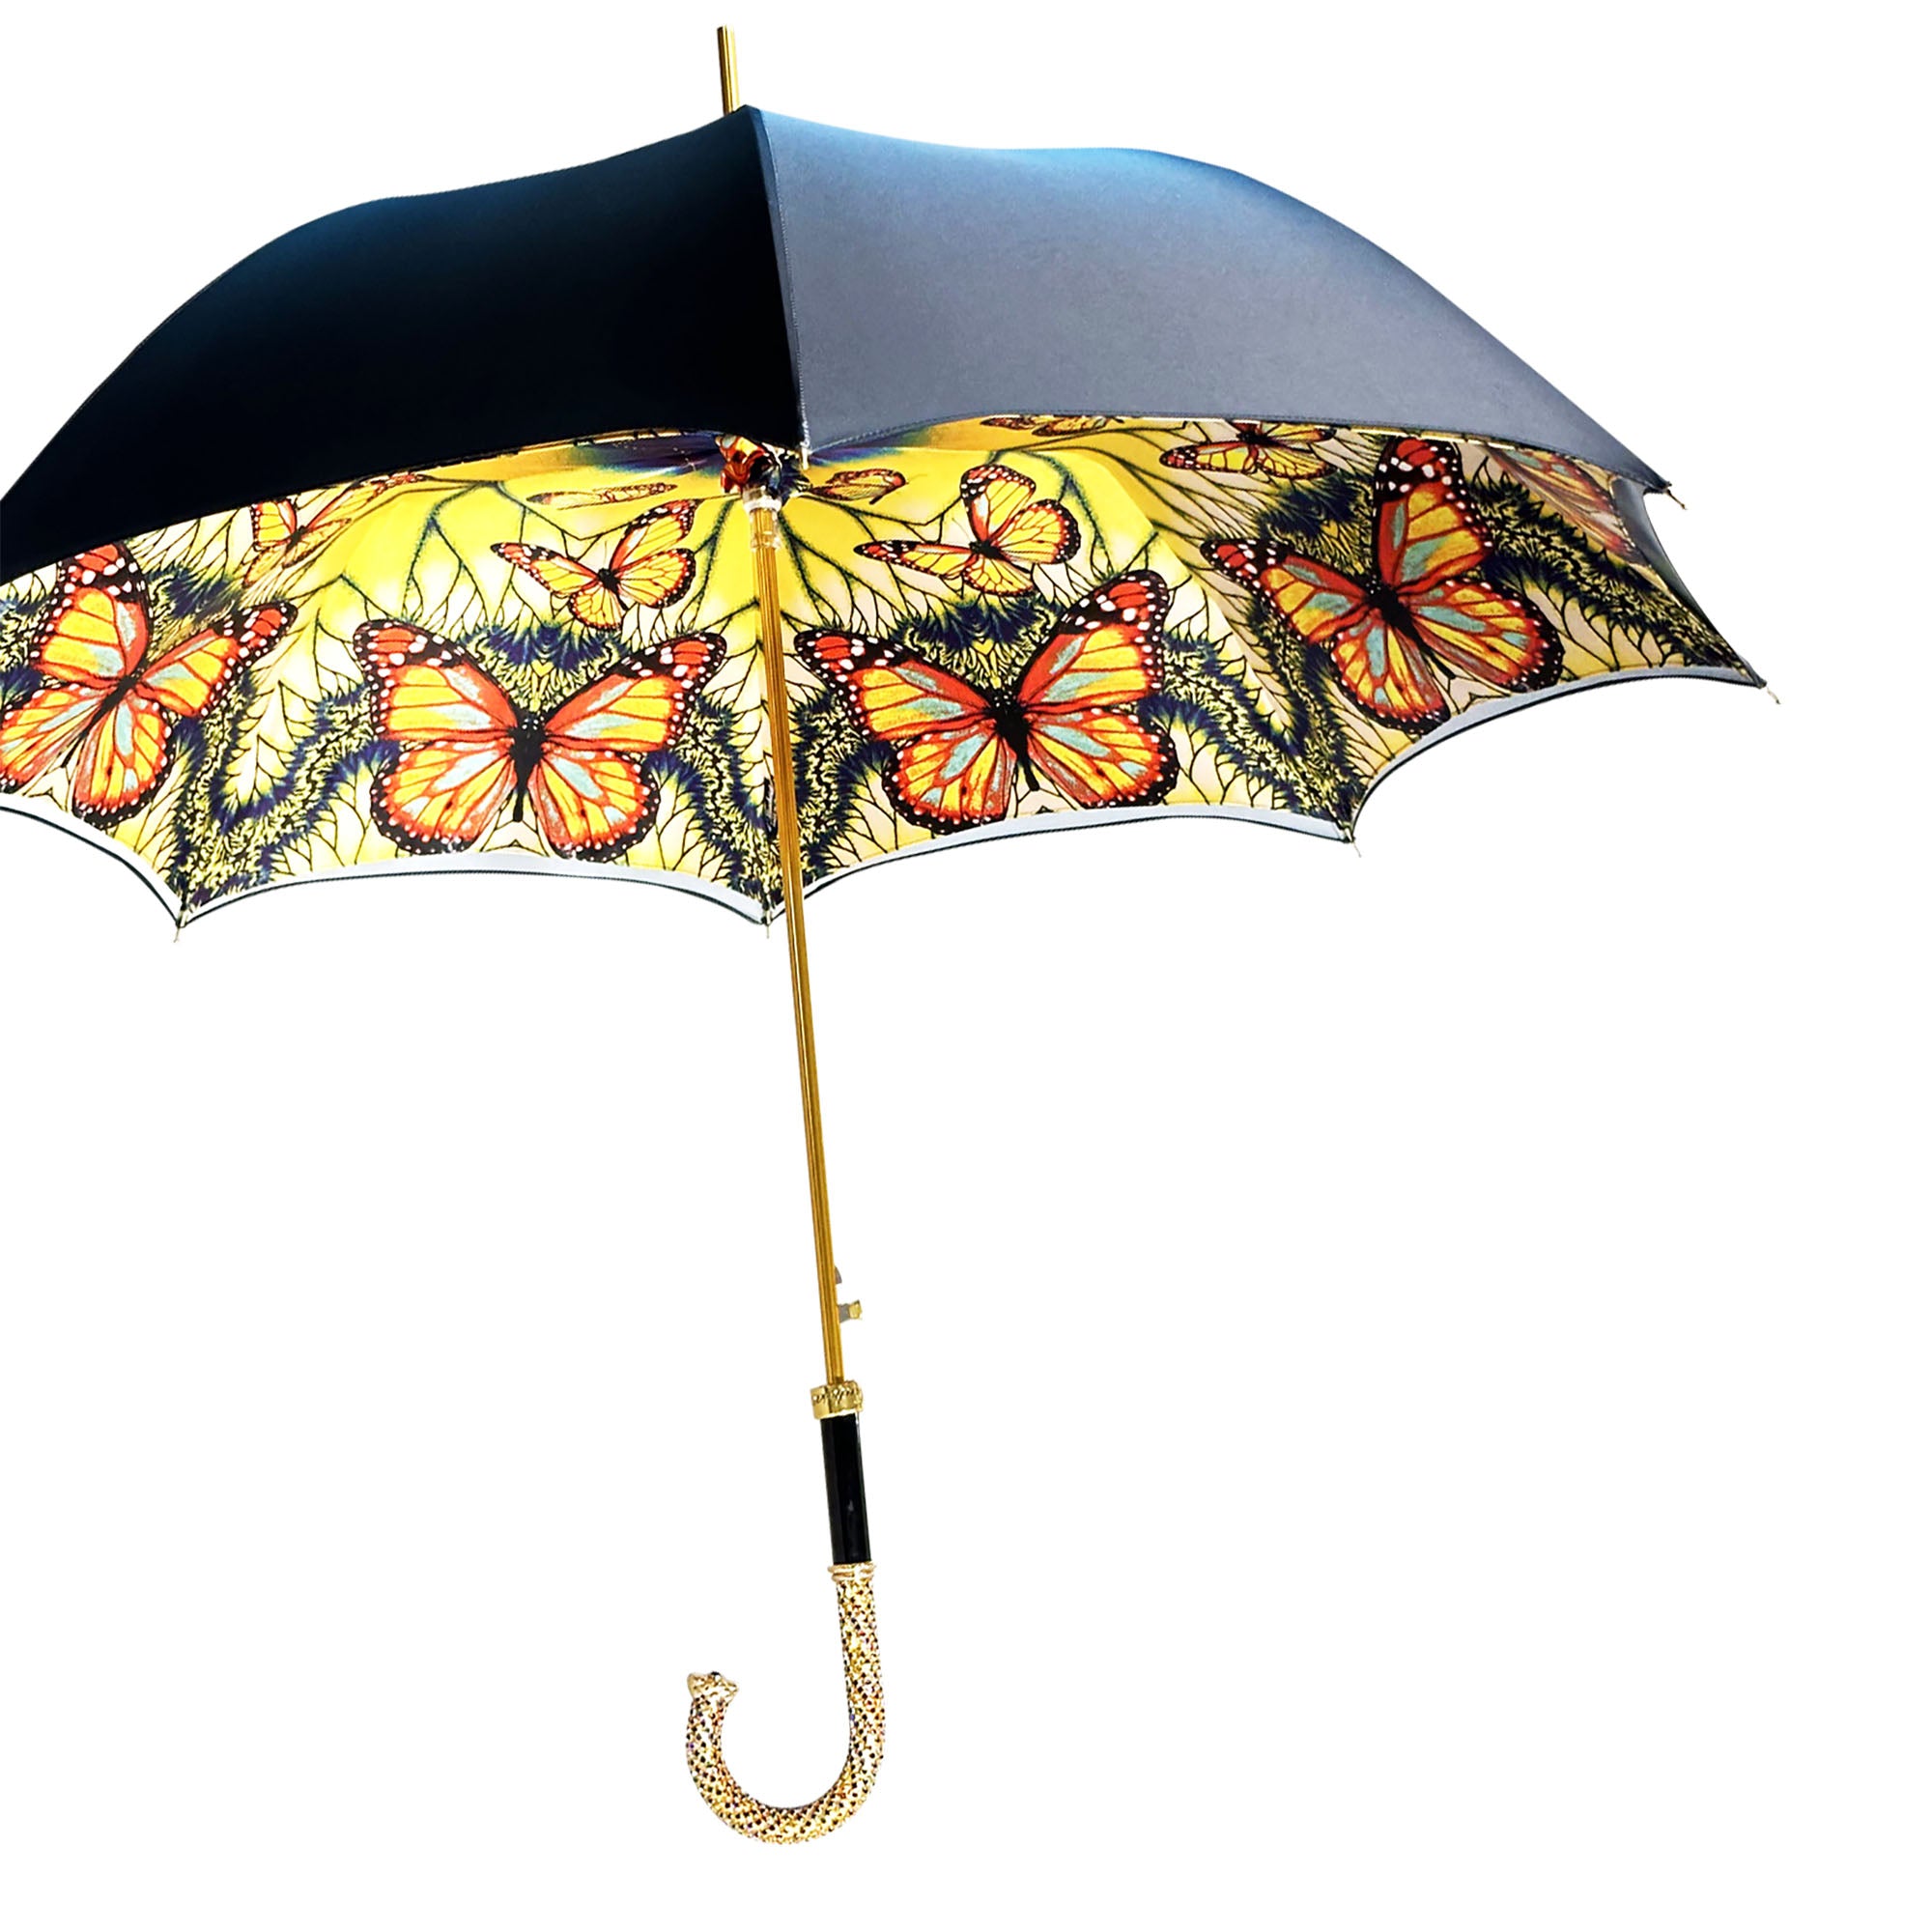 Bellissimo ombrello a doppio baldacchino con design a farfalla